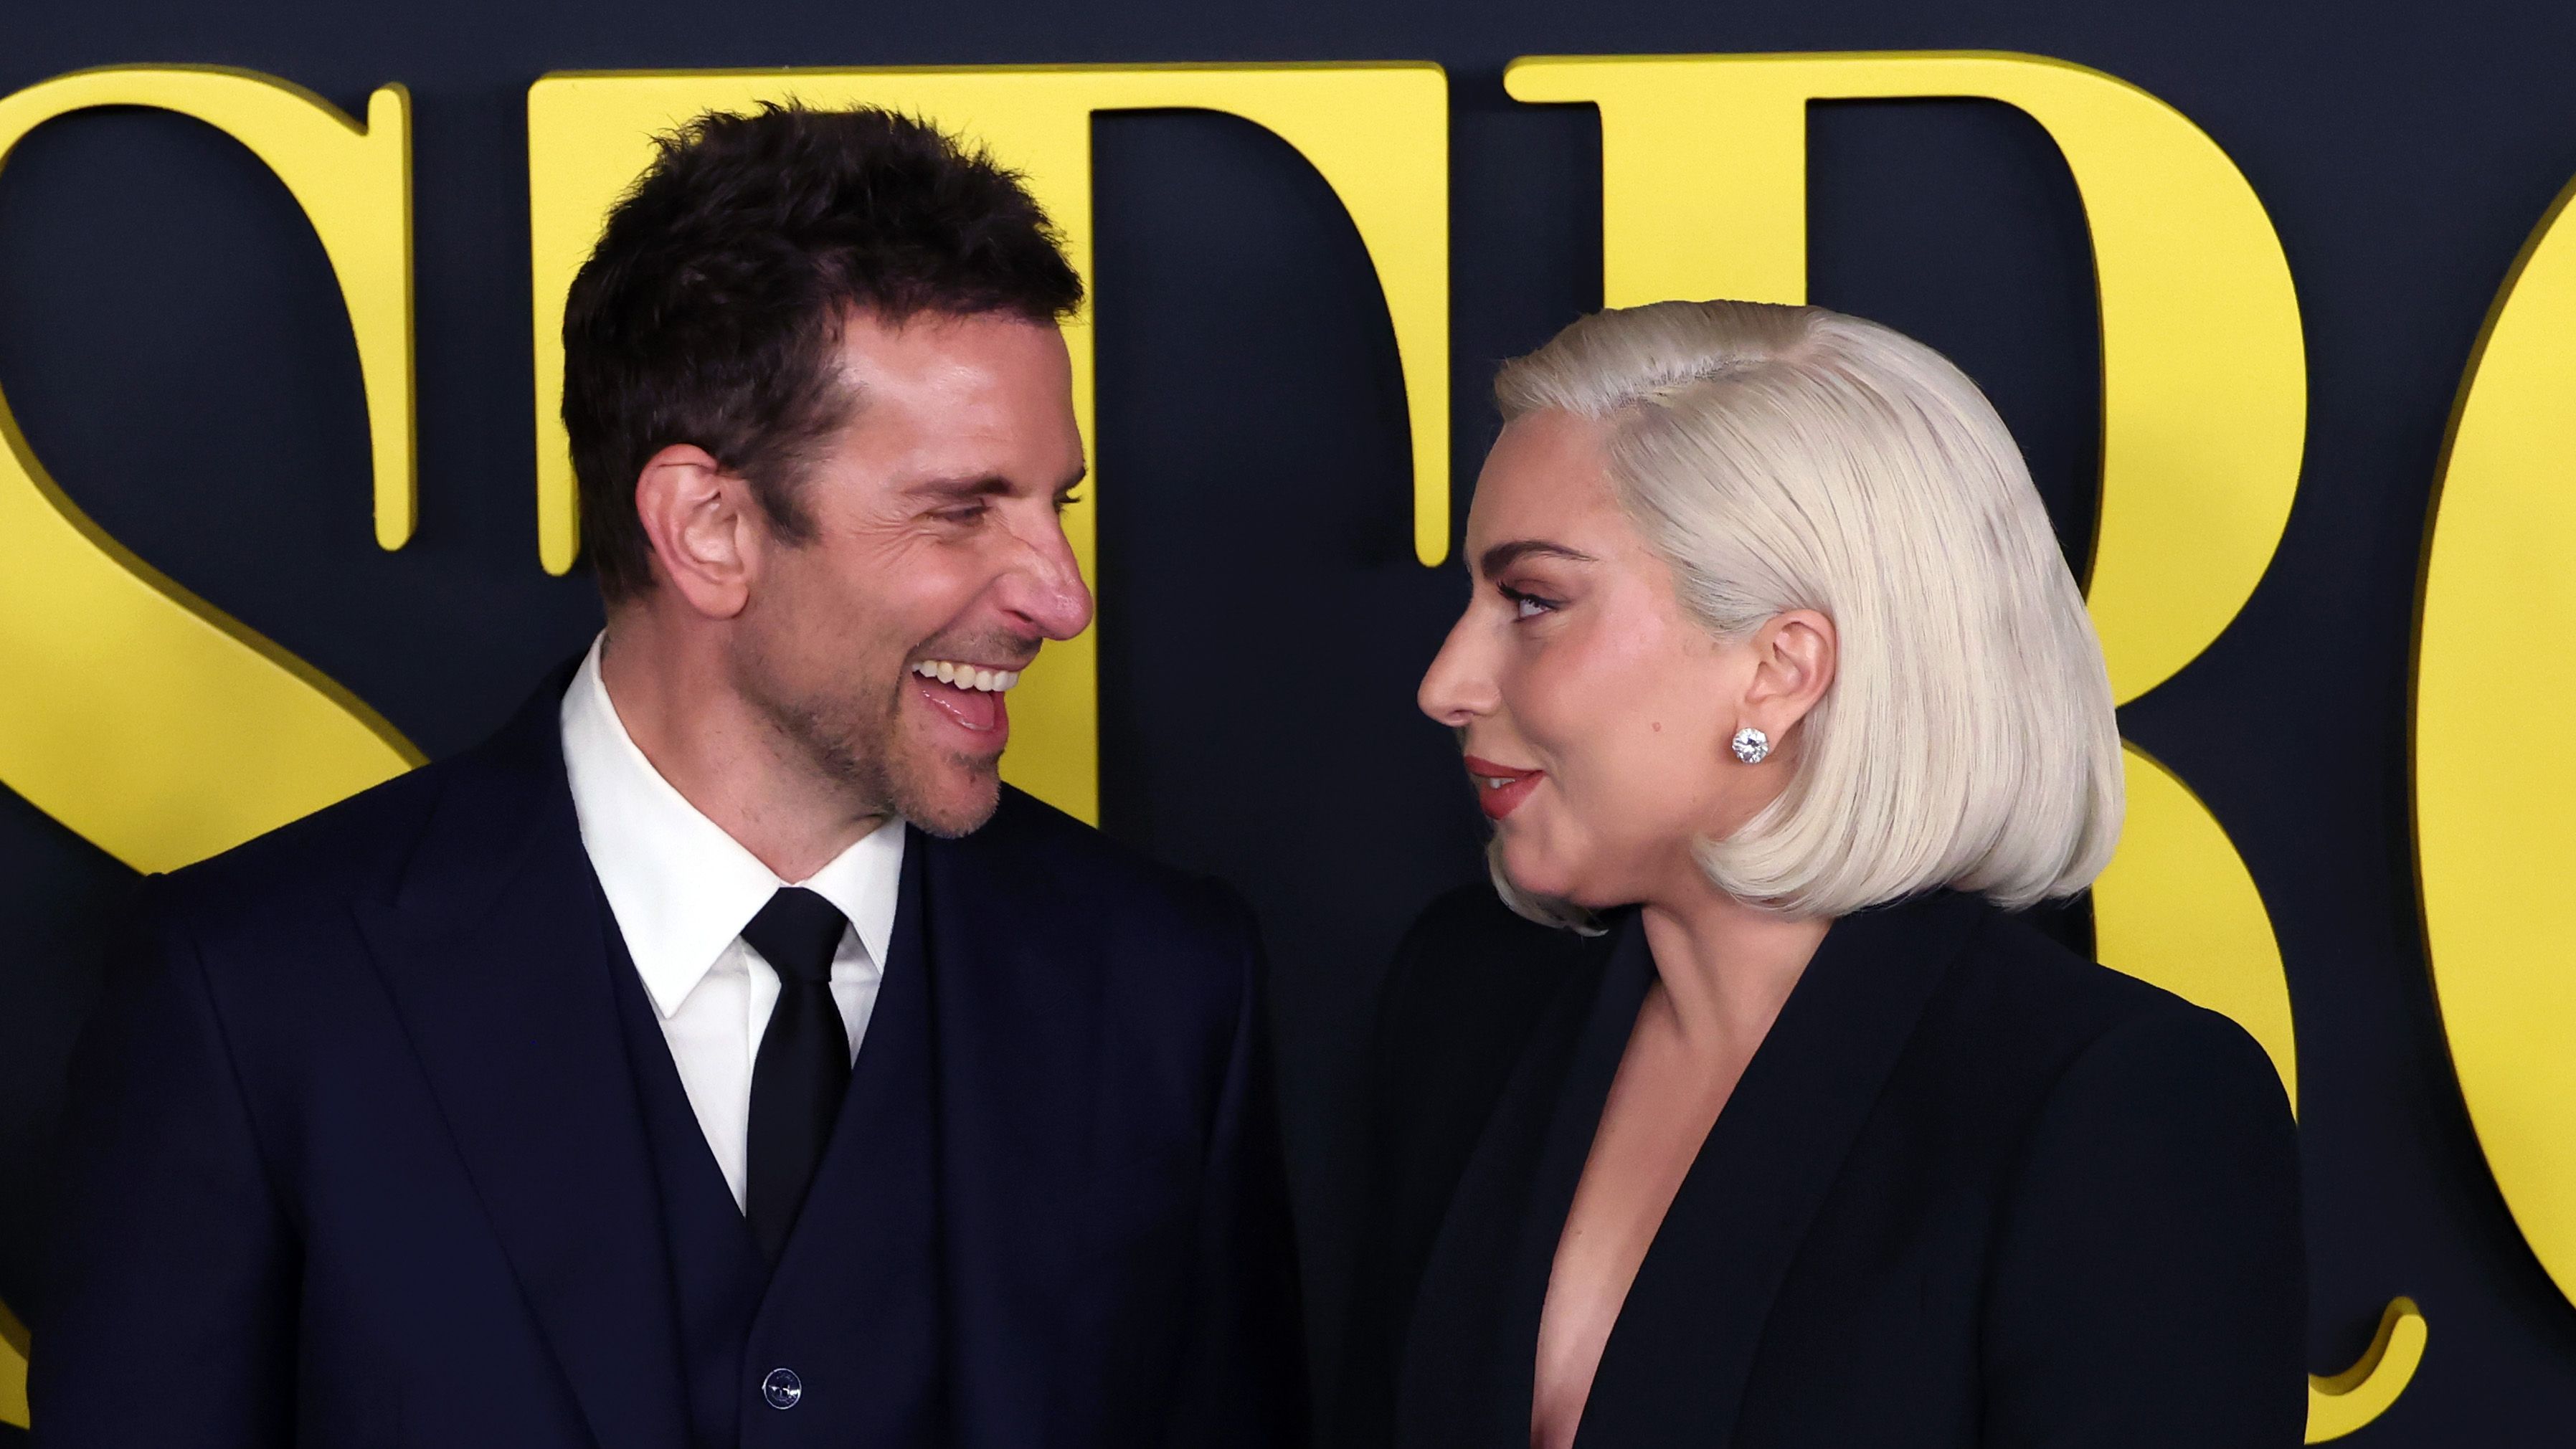 Lady Gaga and Bradley Cooper Reunite at 'Maestro' Premiere